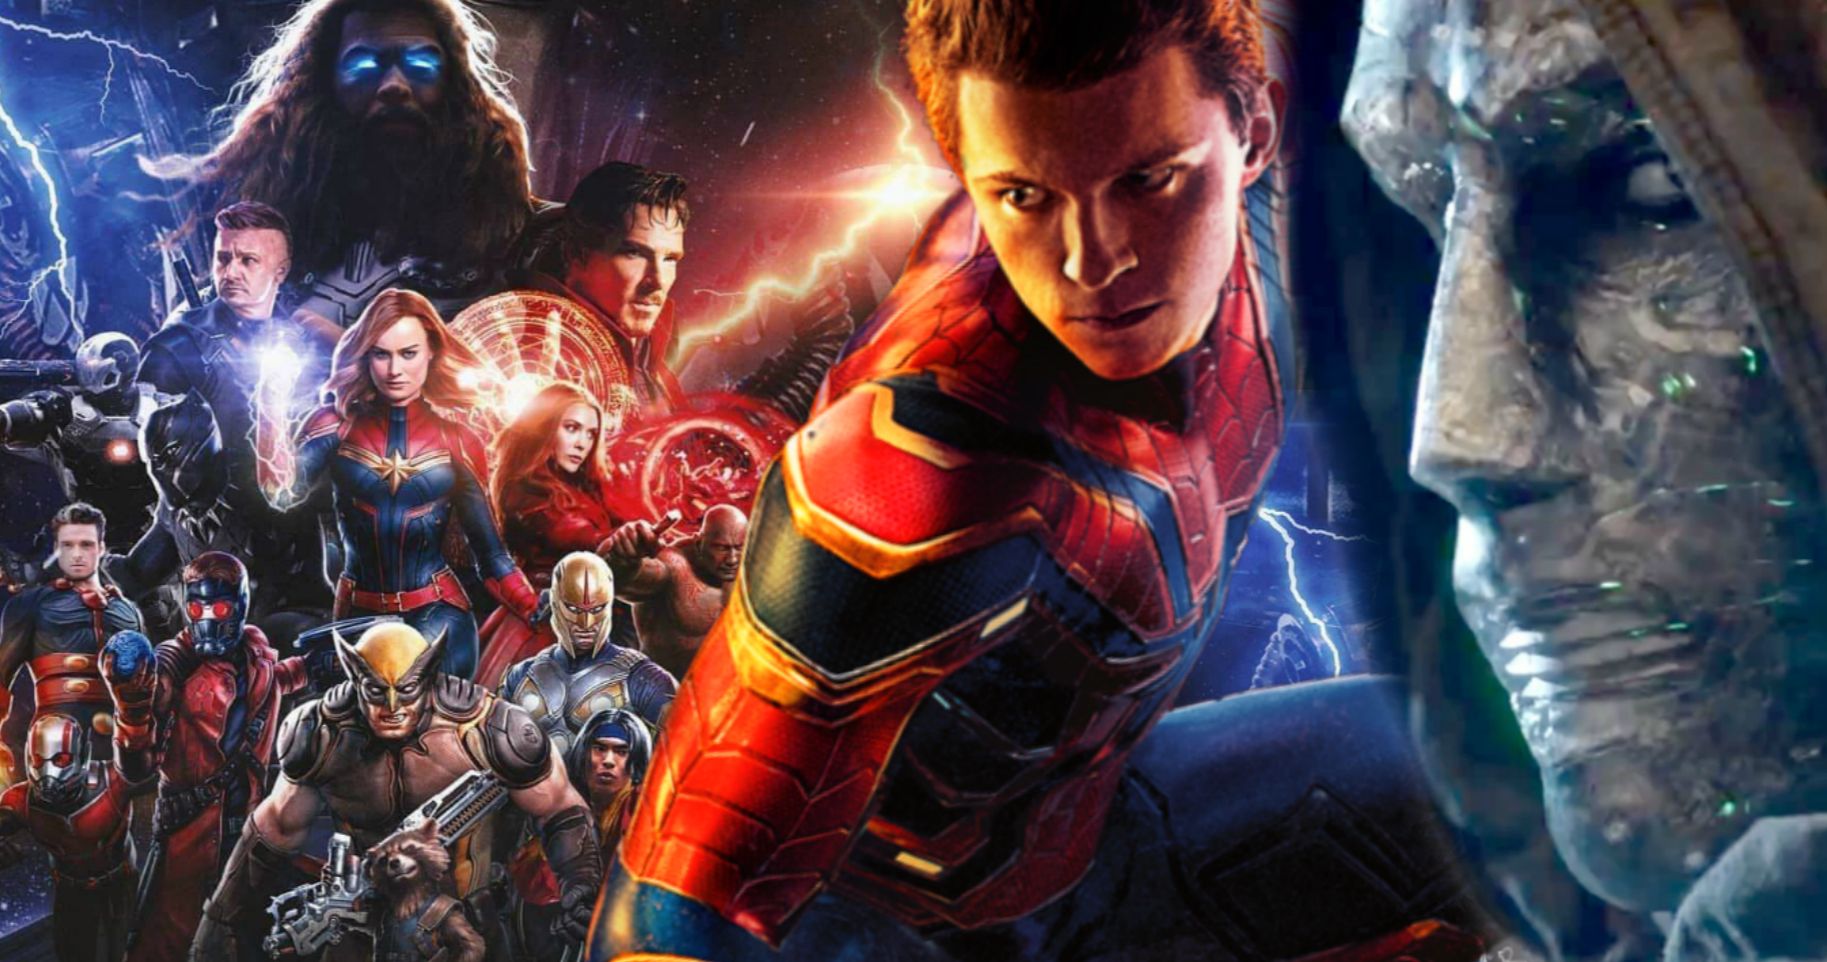 Avengers 5: Secret Wars Easter Egg Discovered in Spider-Man: Far from Home?